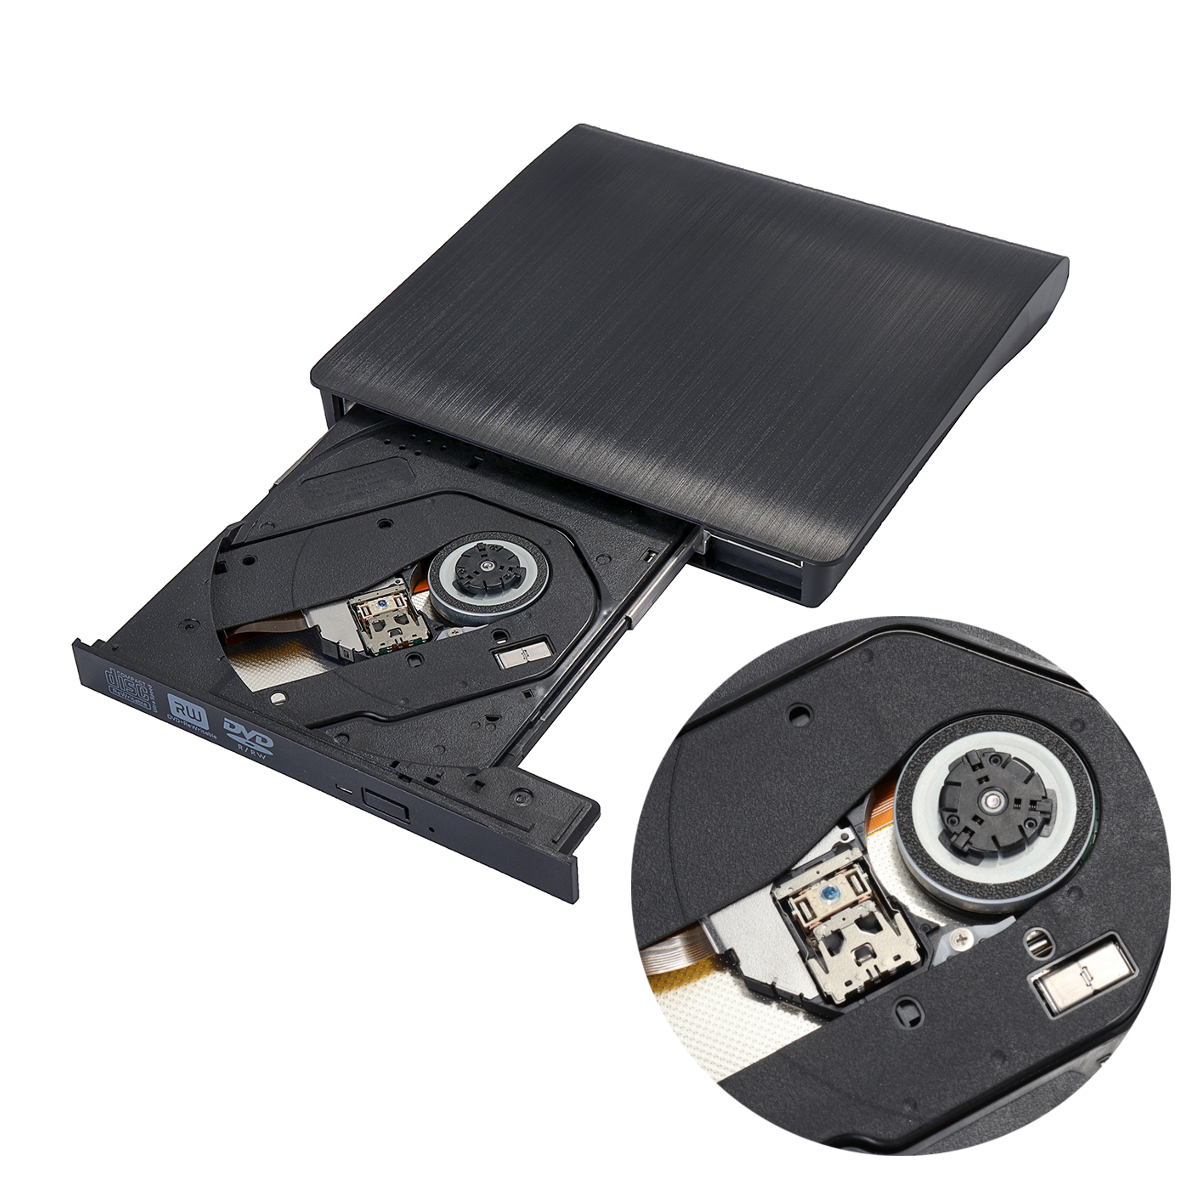 Pop-up-External-DVD-RW-CD-Writer-Drive-USB-30-Optical-Drives-Slim-Burner-Reader-Player-1376675